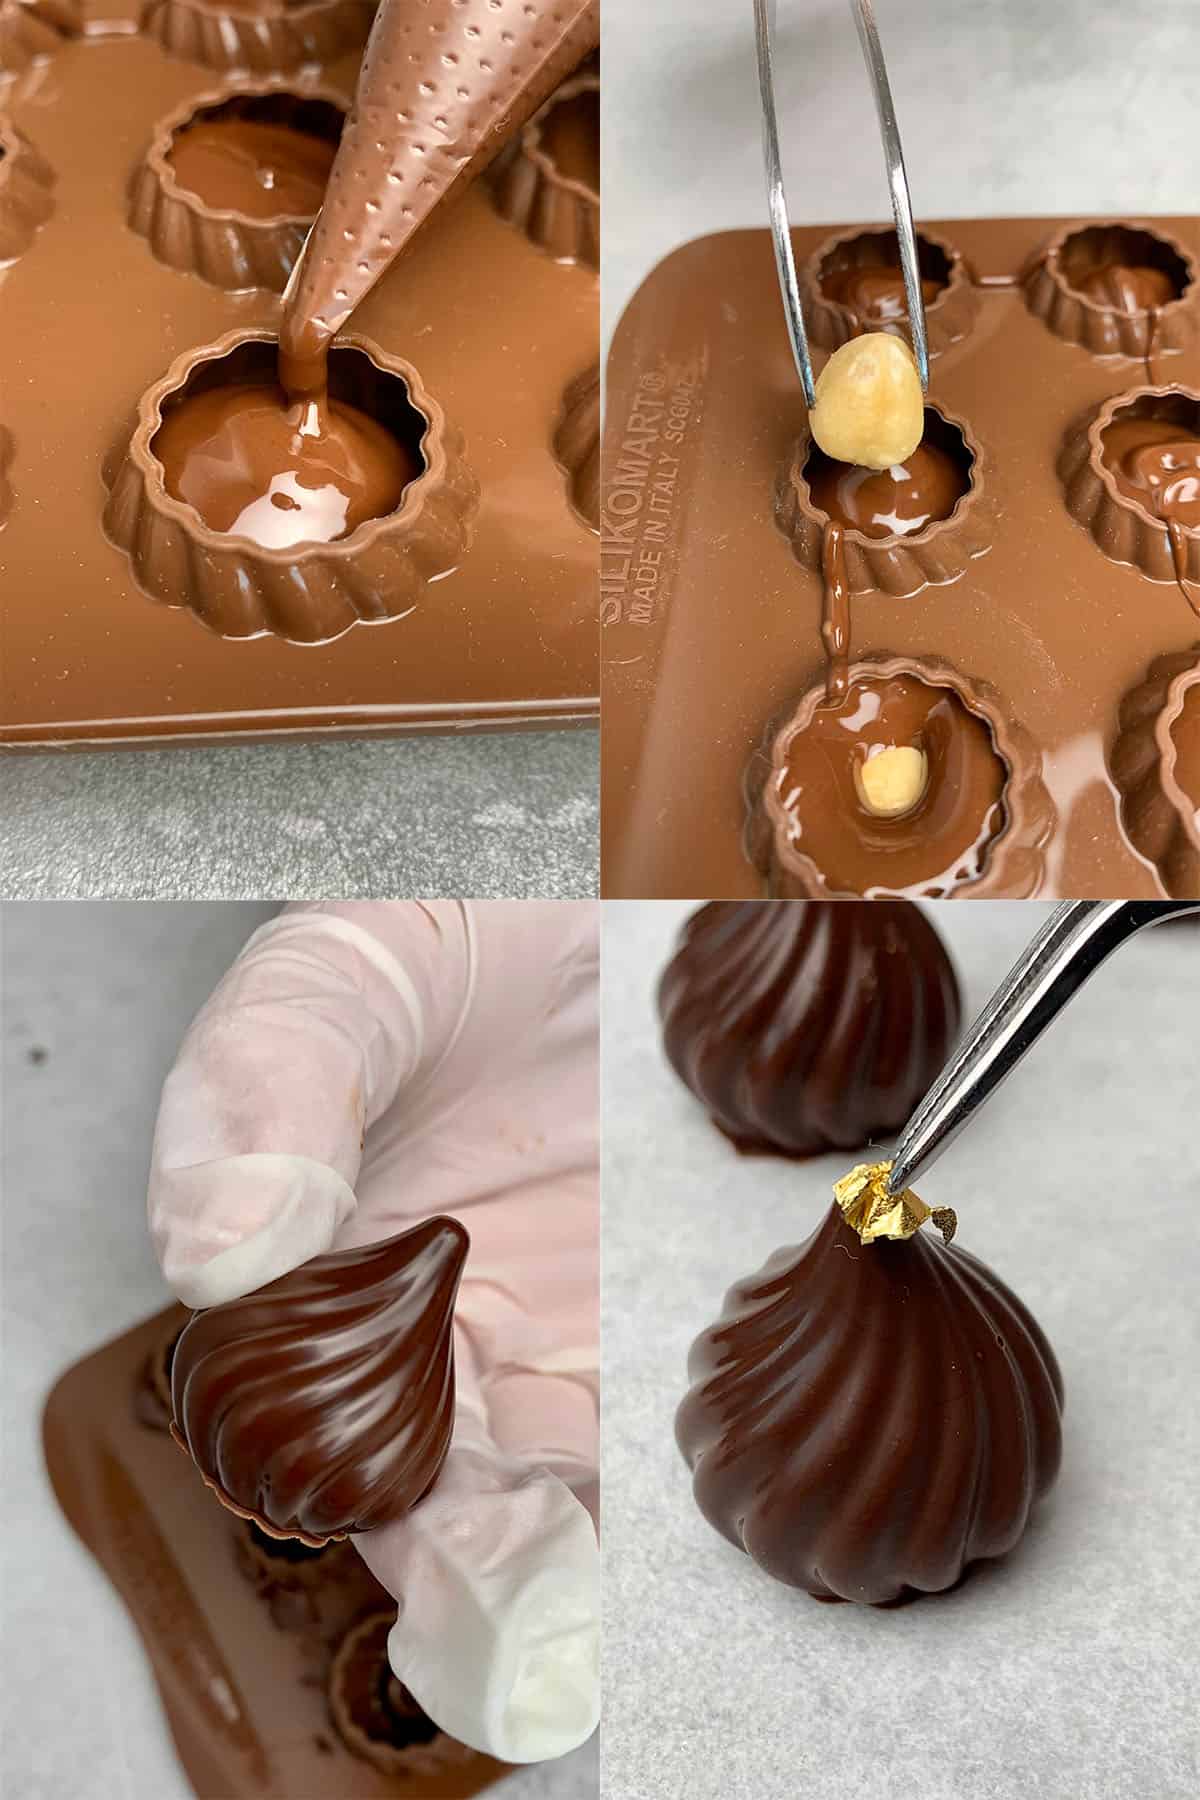 Chocolate bonbon assembly.